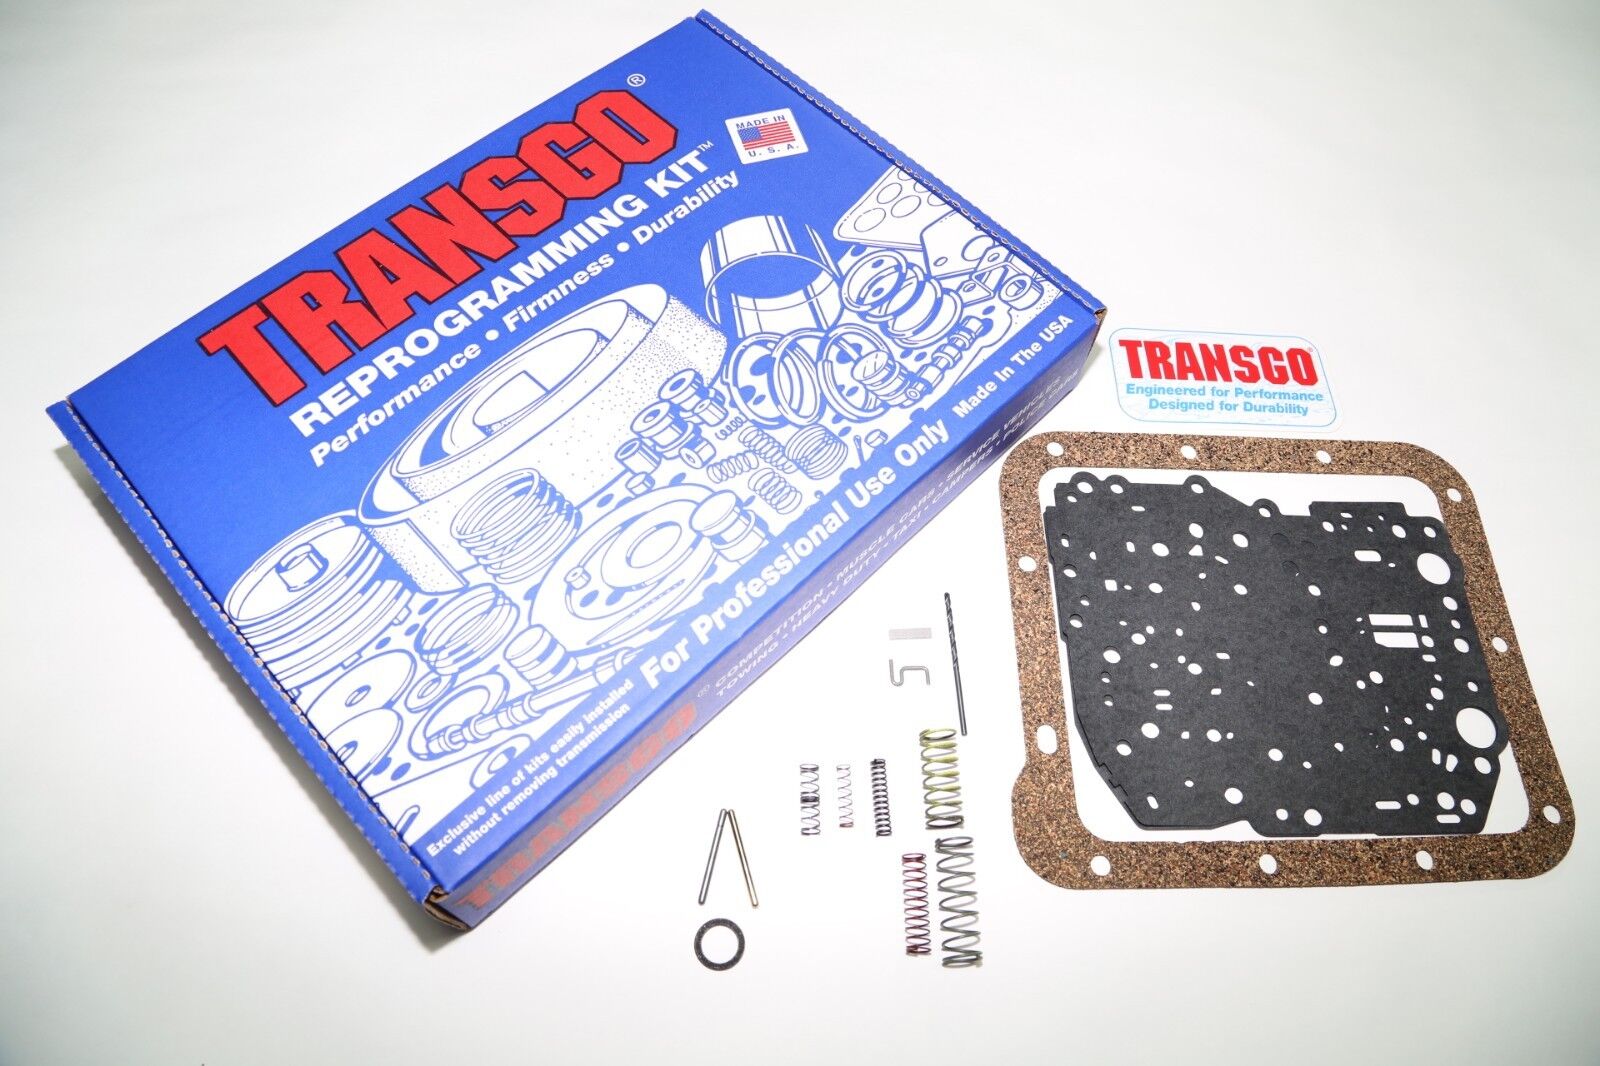 Transgo 47-3 C4 Shift Kit Full Manual 67-69 Ford Transmission Forward Pattern